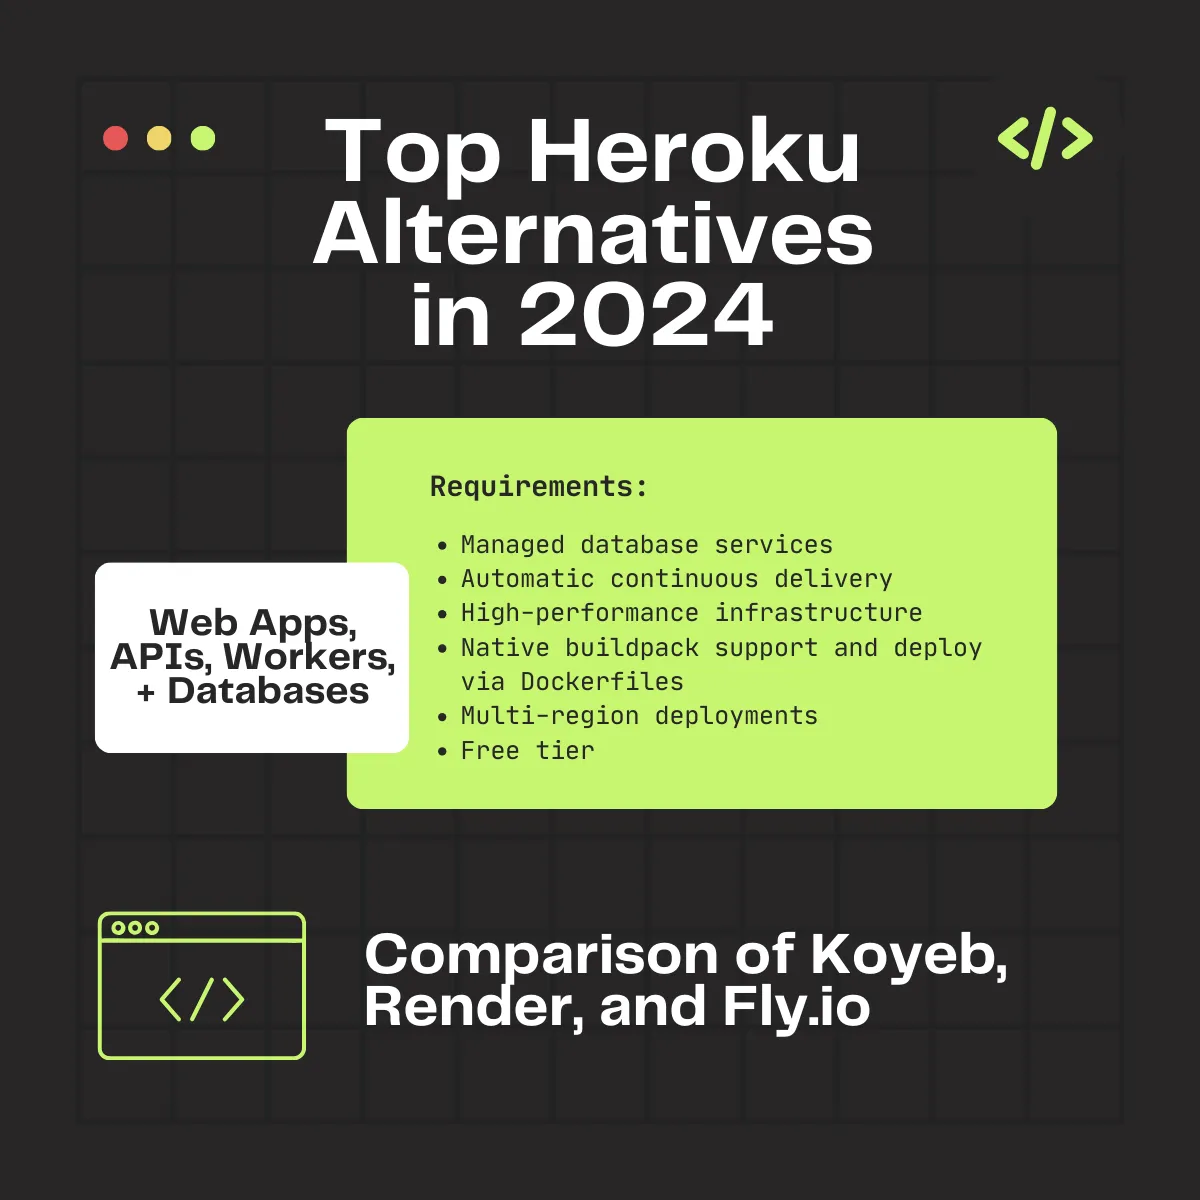 Top Heroku Alternatives in 2024